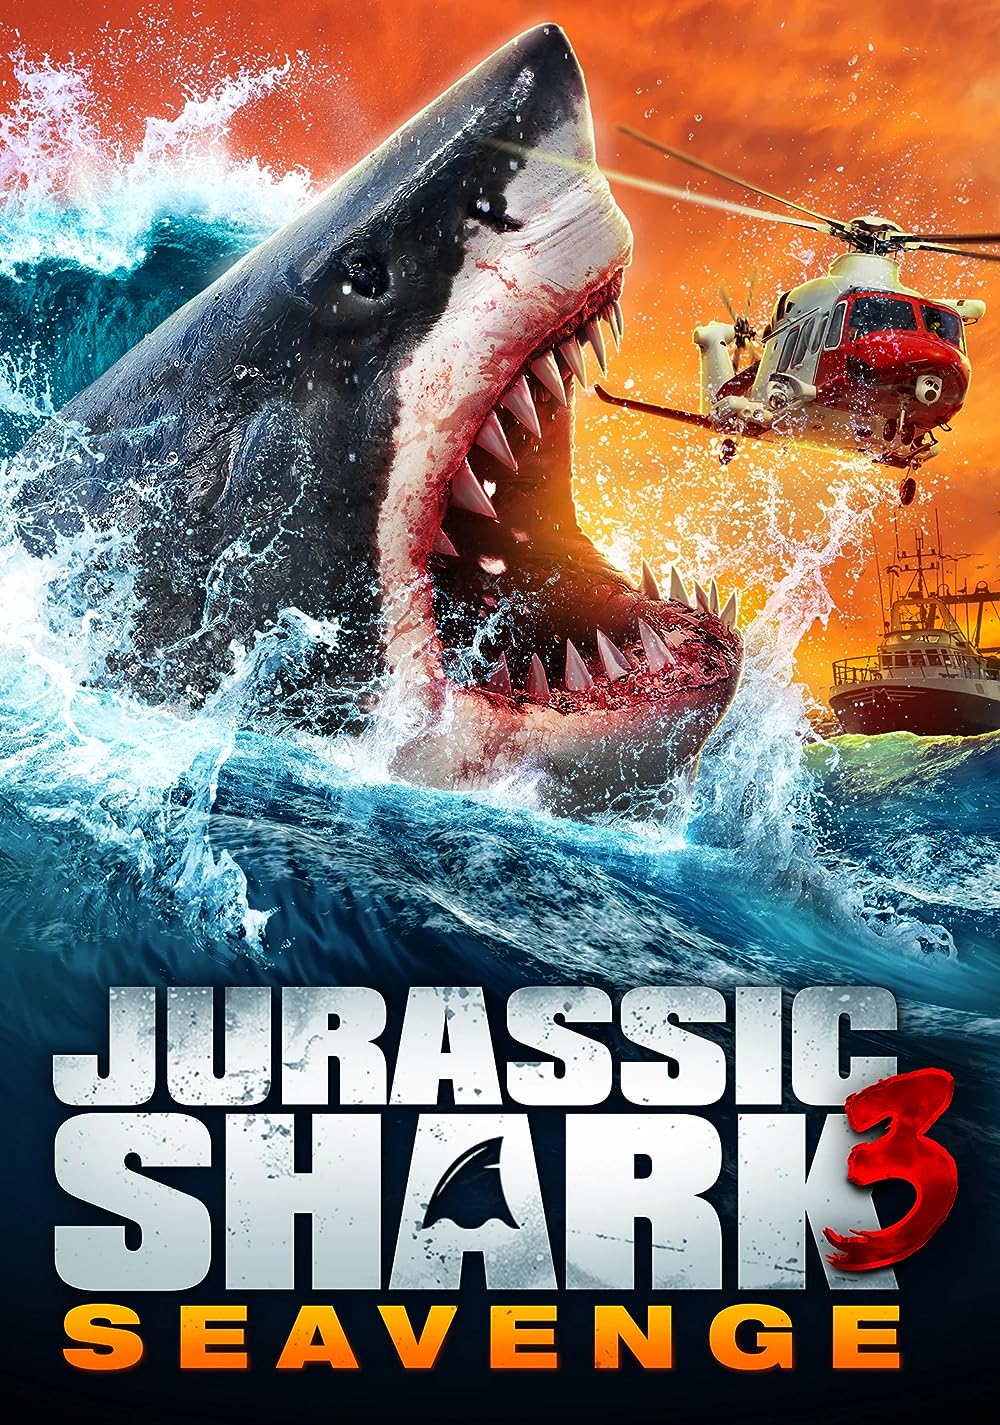 مشاهدة فيلم Jurassic Shark 3: Seavenge 2023 مترجم اون لاين